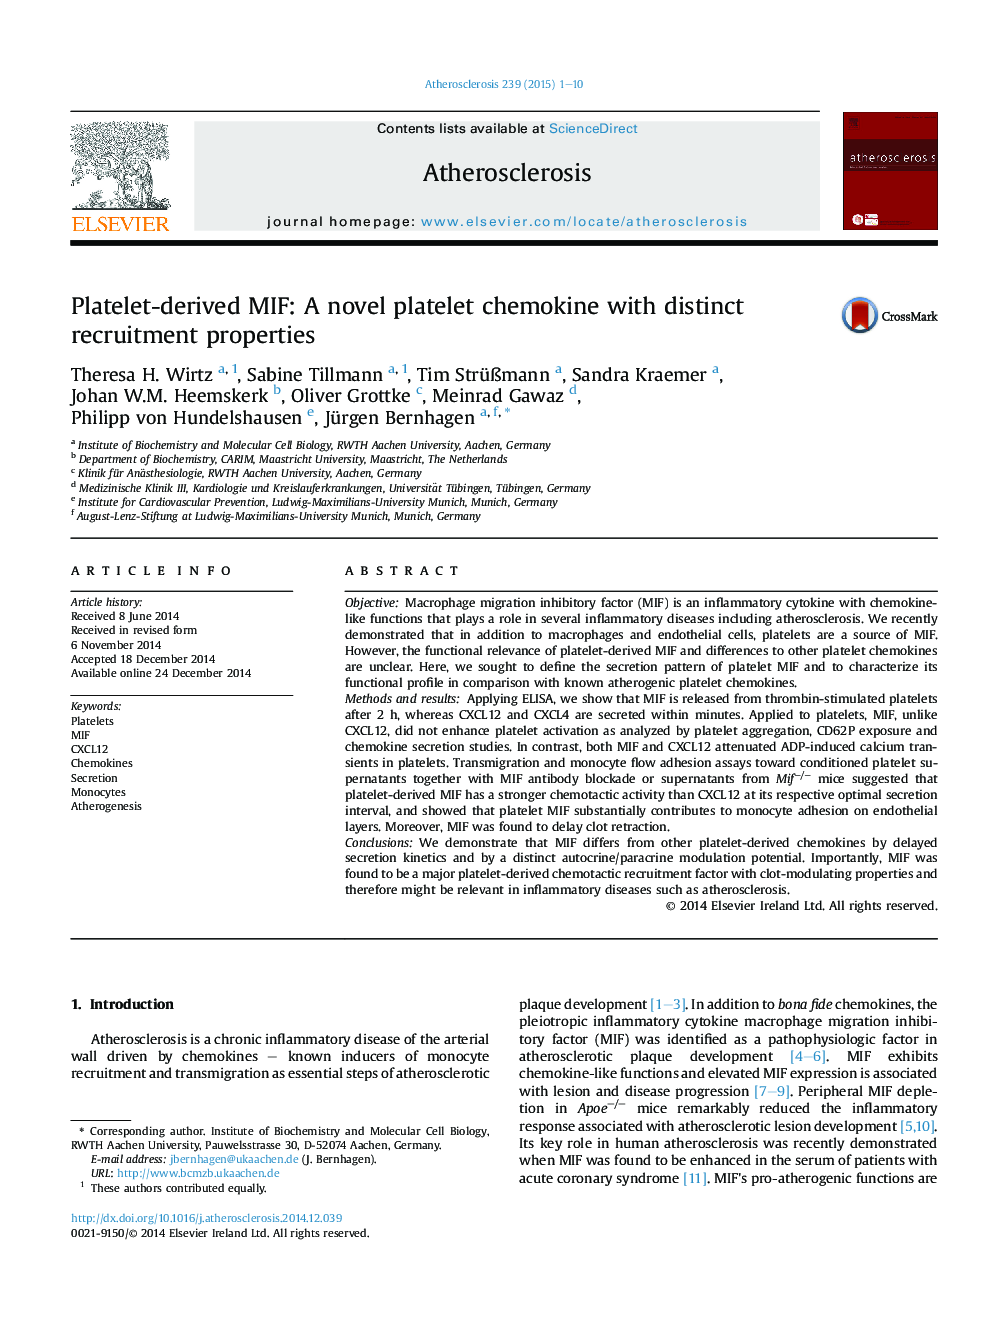 Platelet-derived MIF: A novel platelet chemokine with distinct recruitment properties